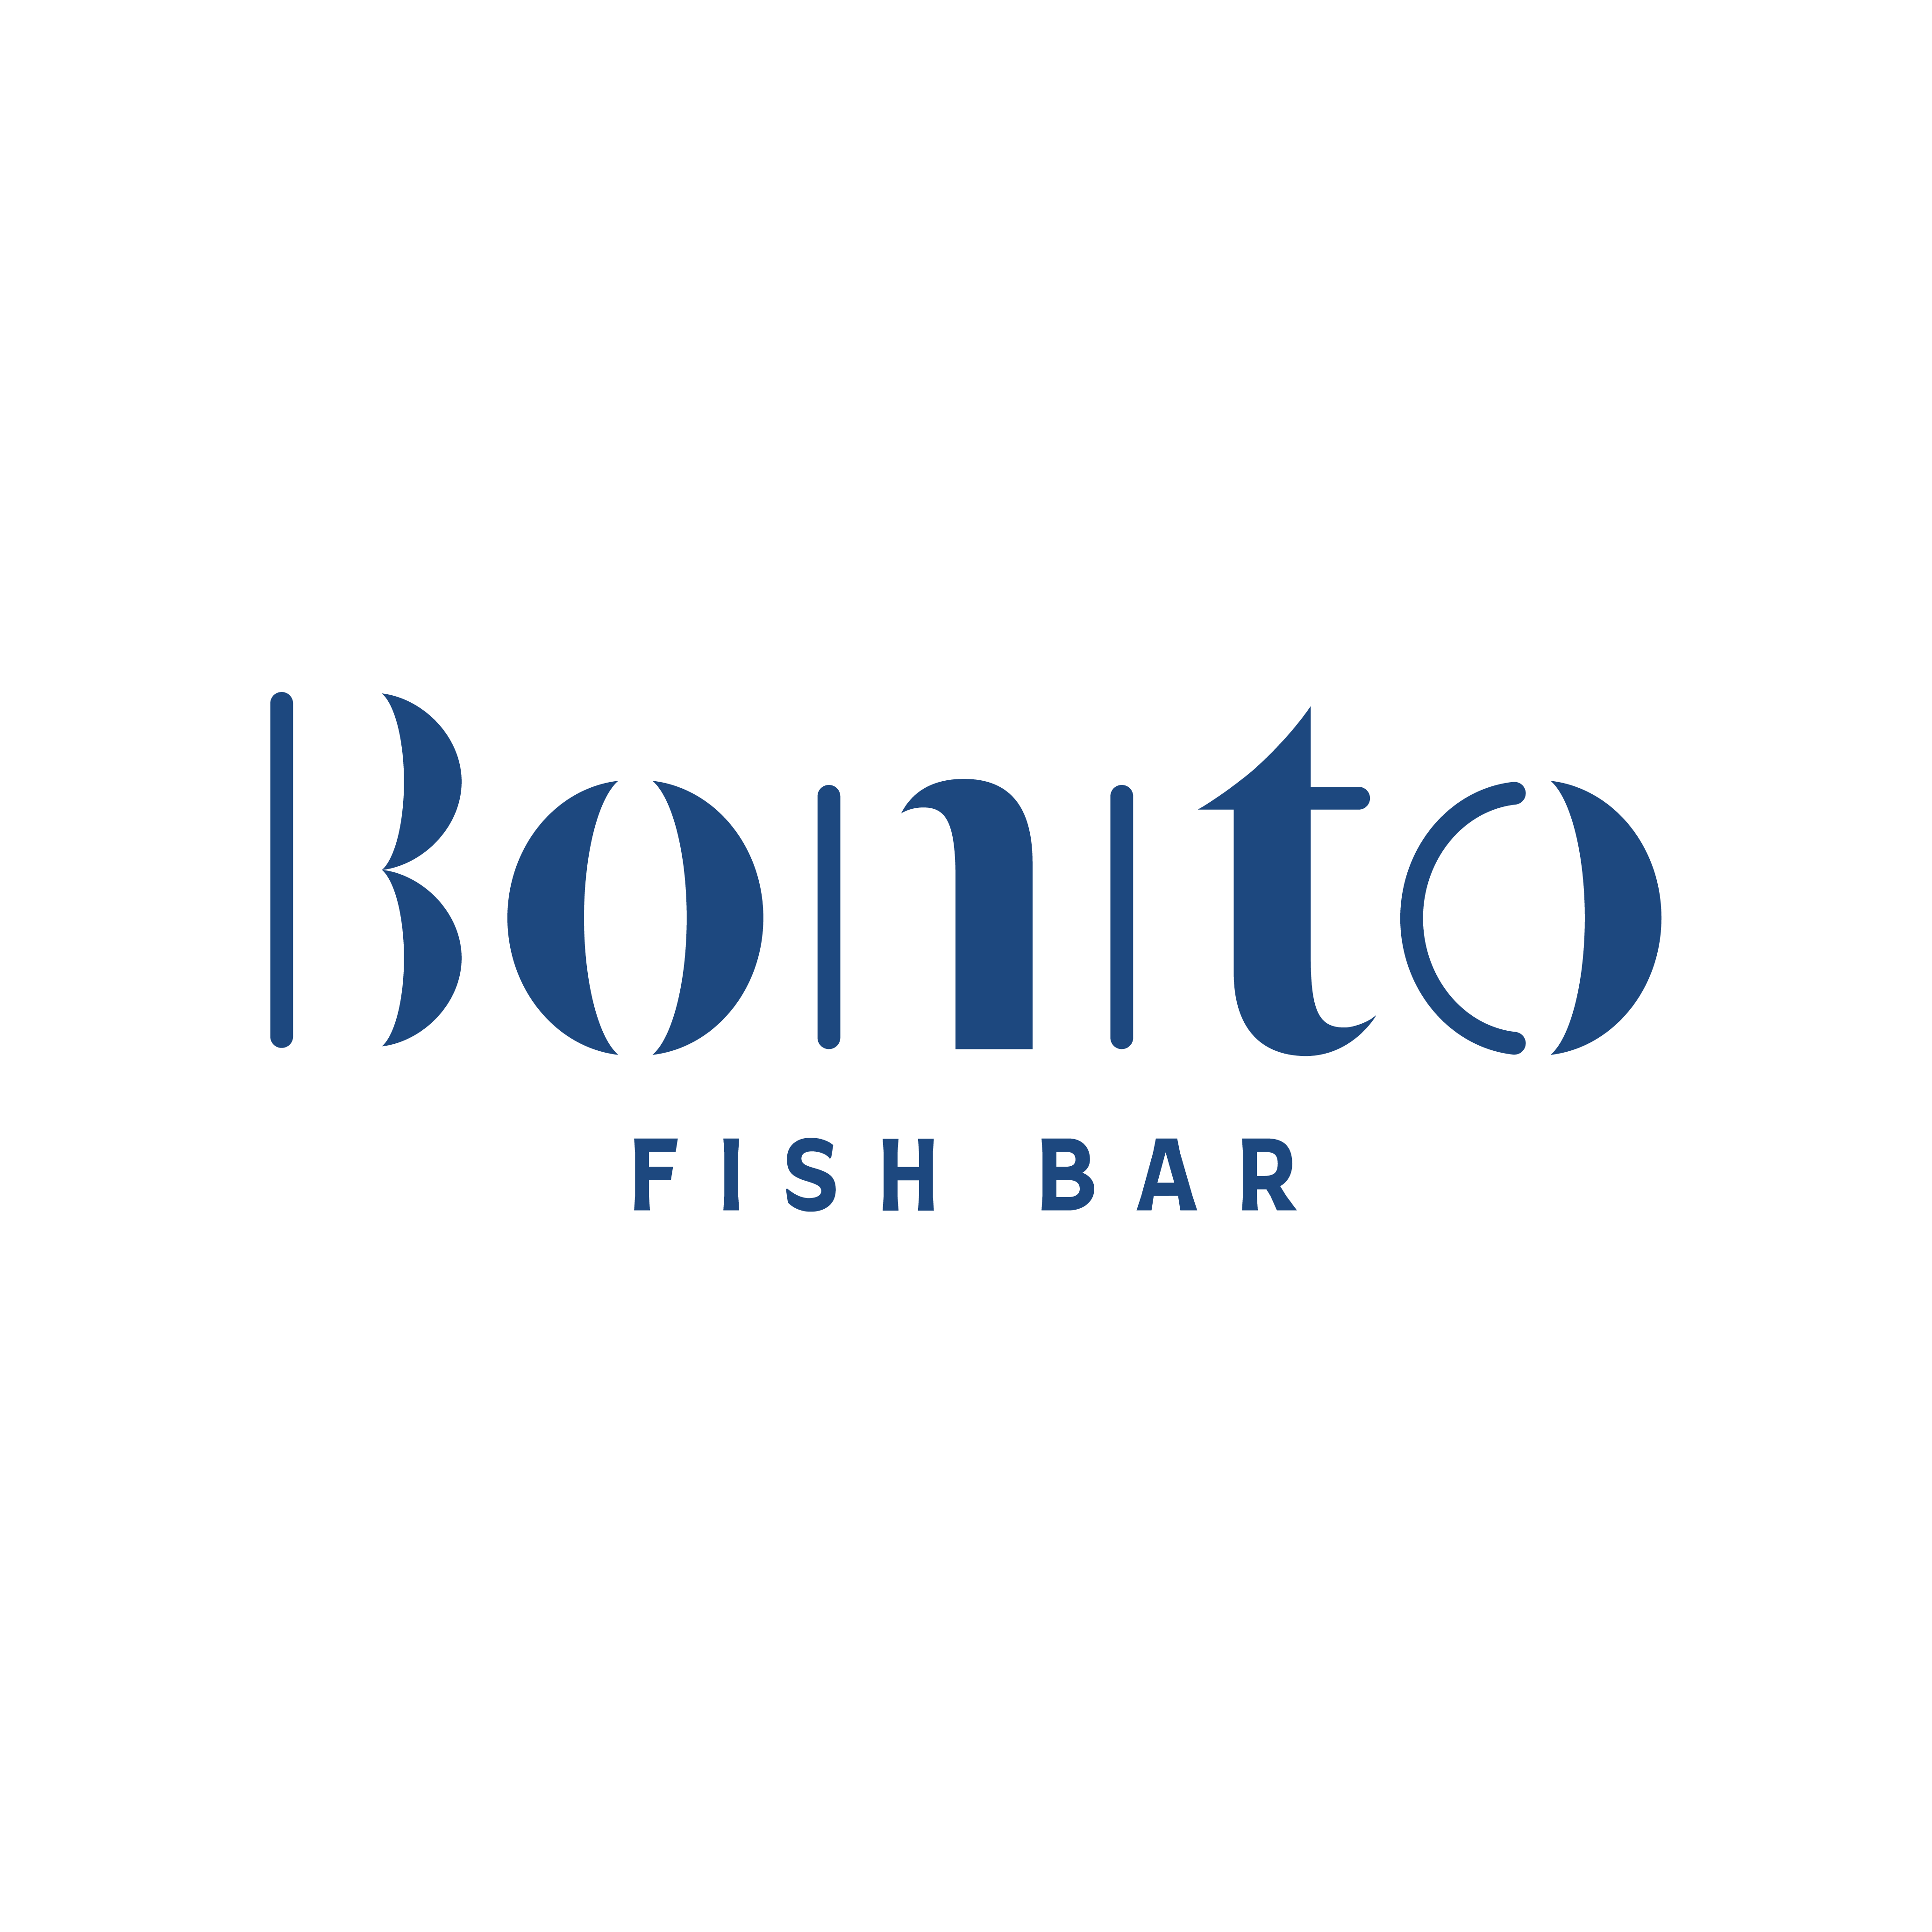 Bonito Fish Bar Restaurant